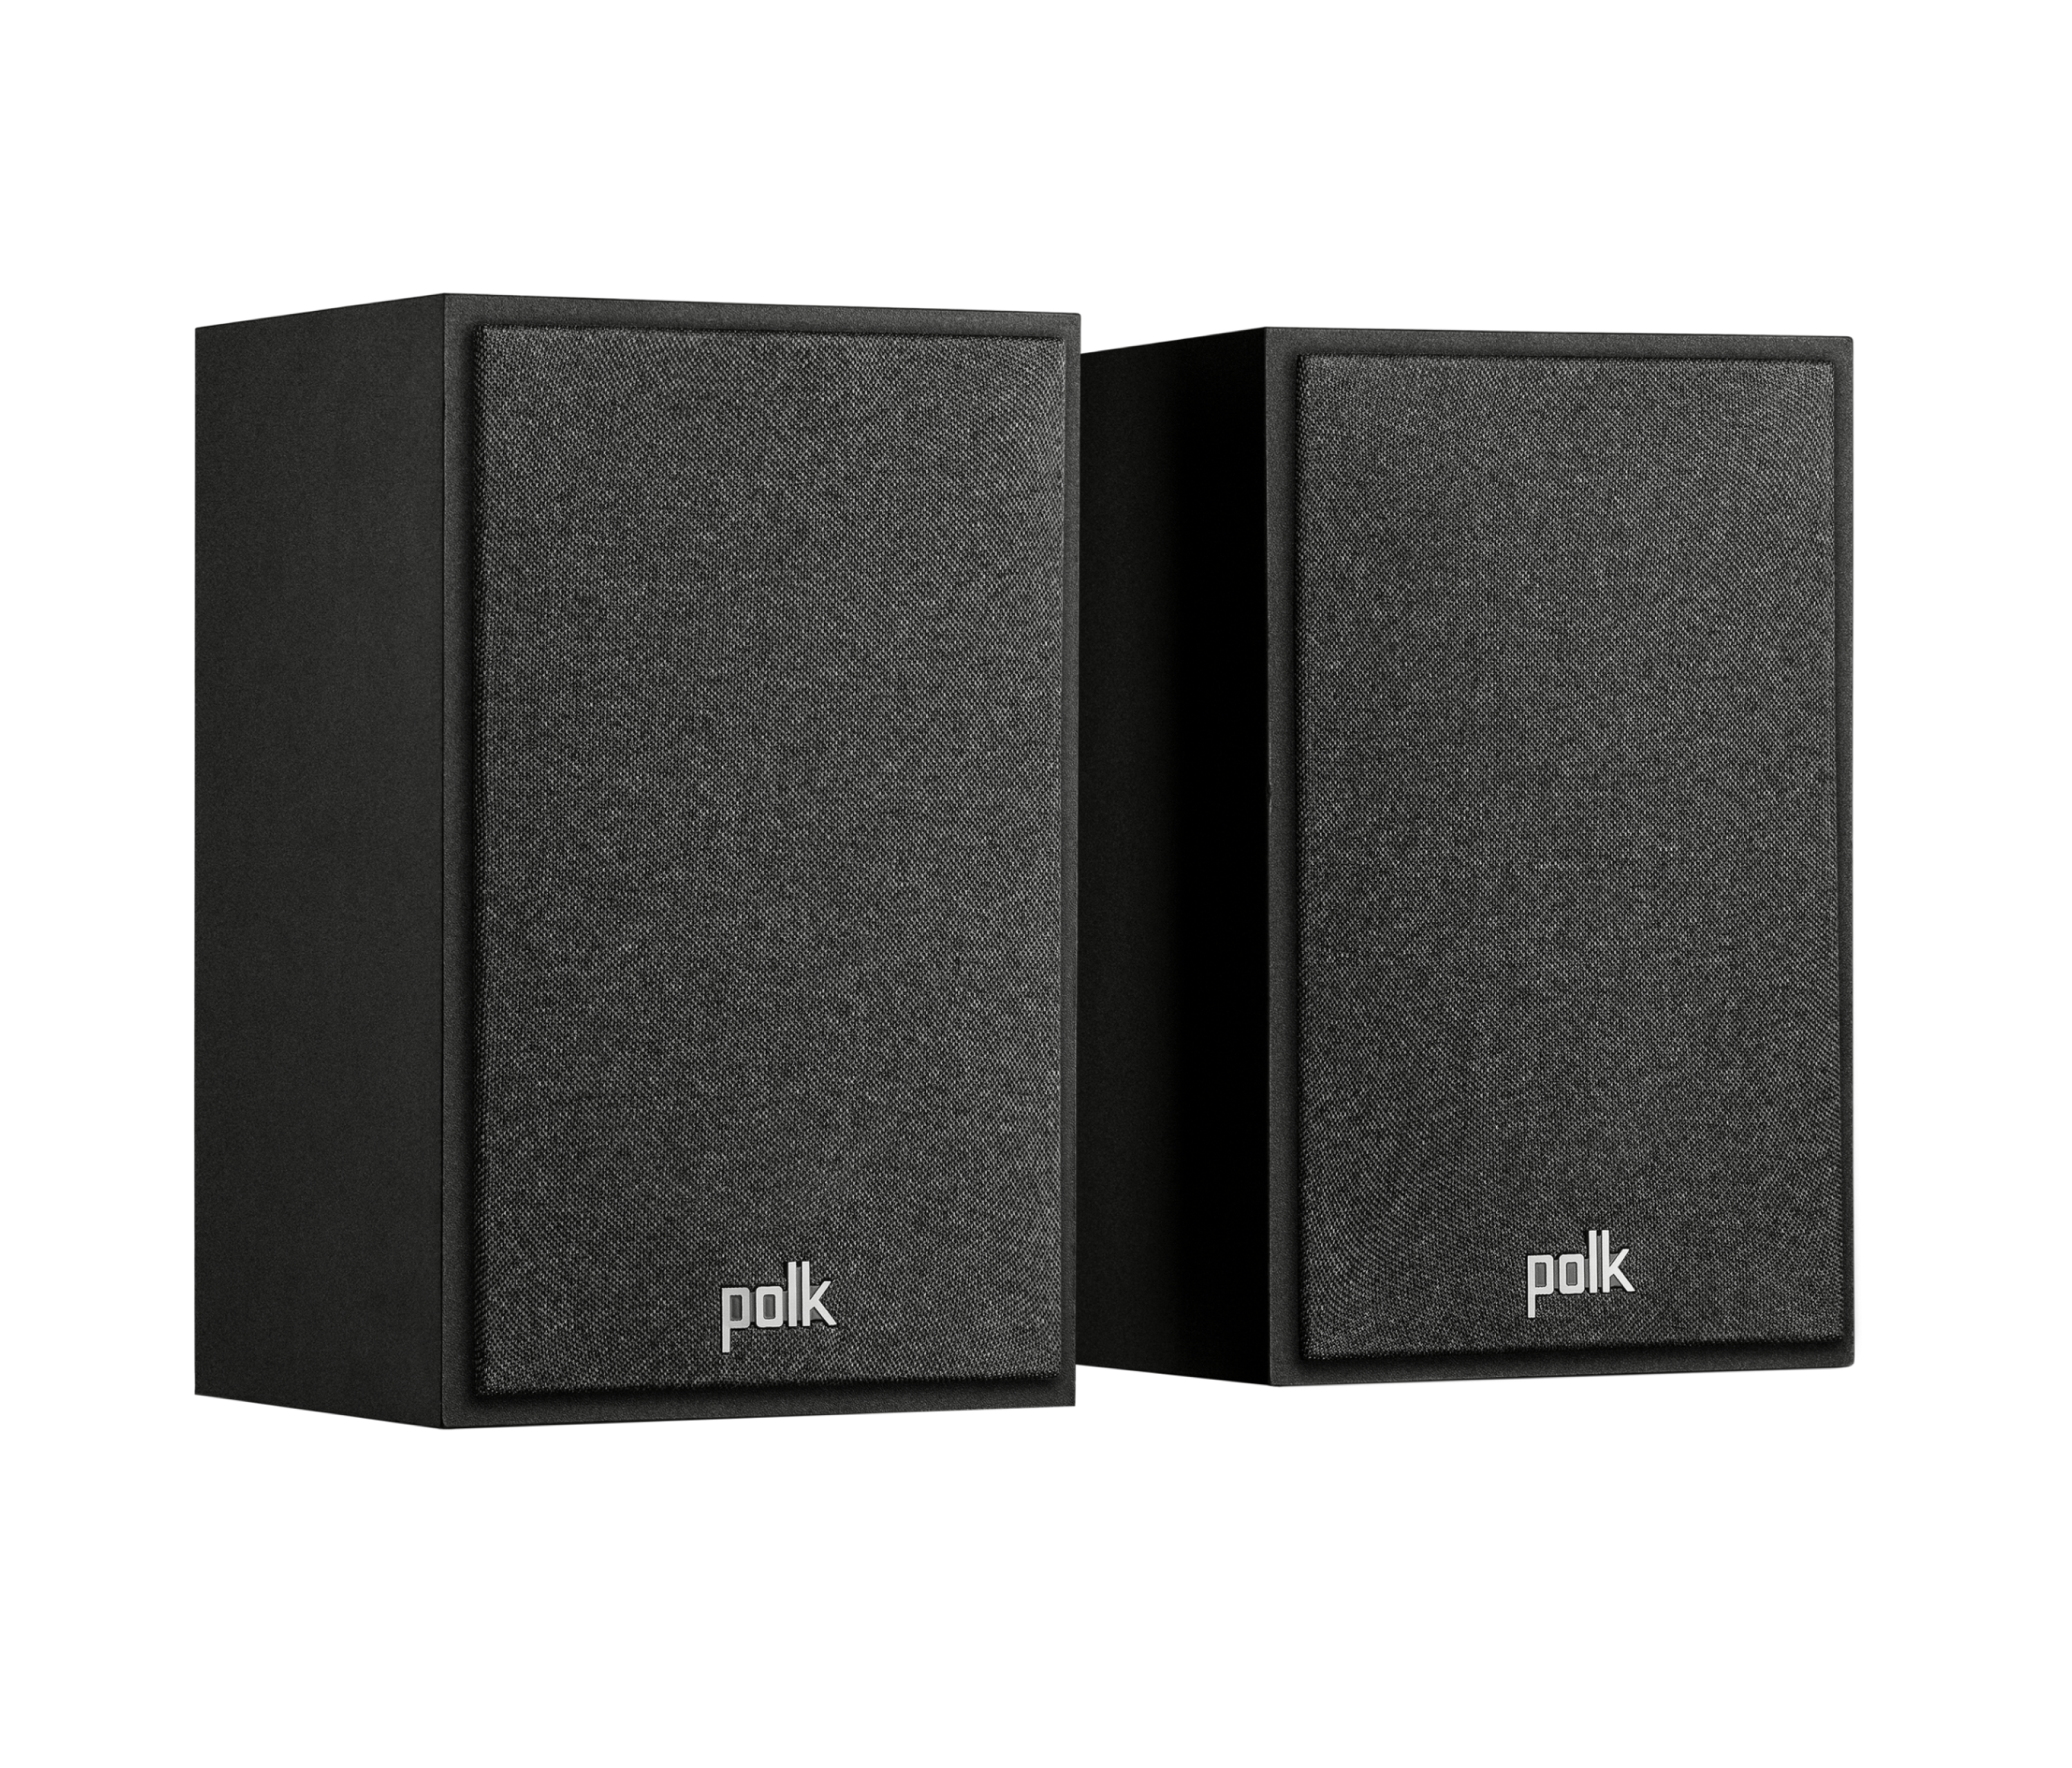 Monitor XT15 Bookshelf Speakers (Pair) | Polk Audio